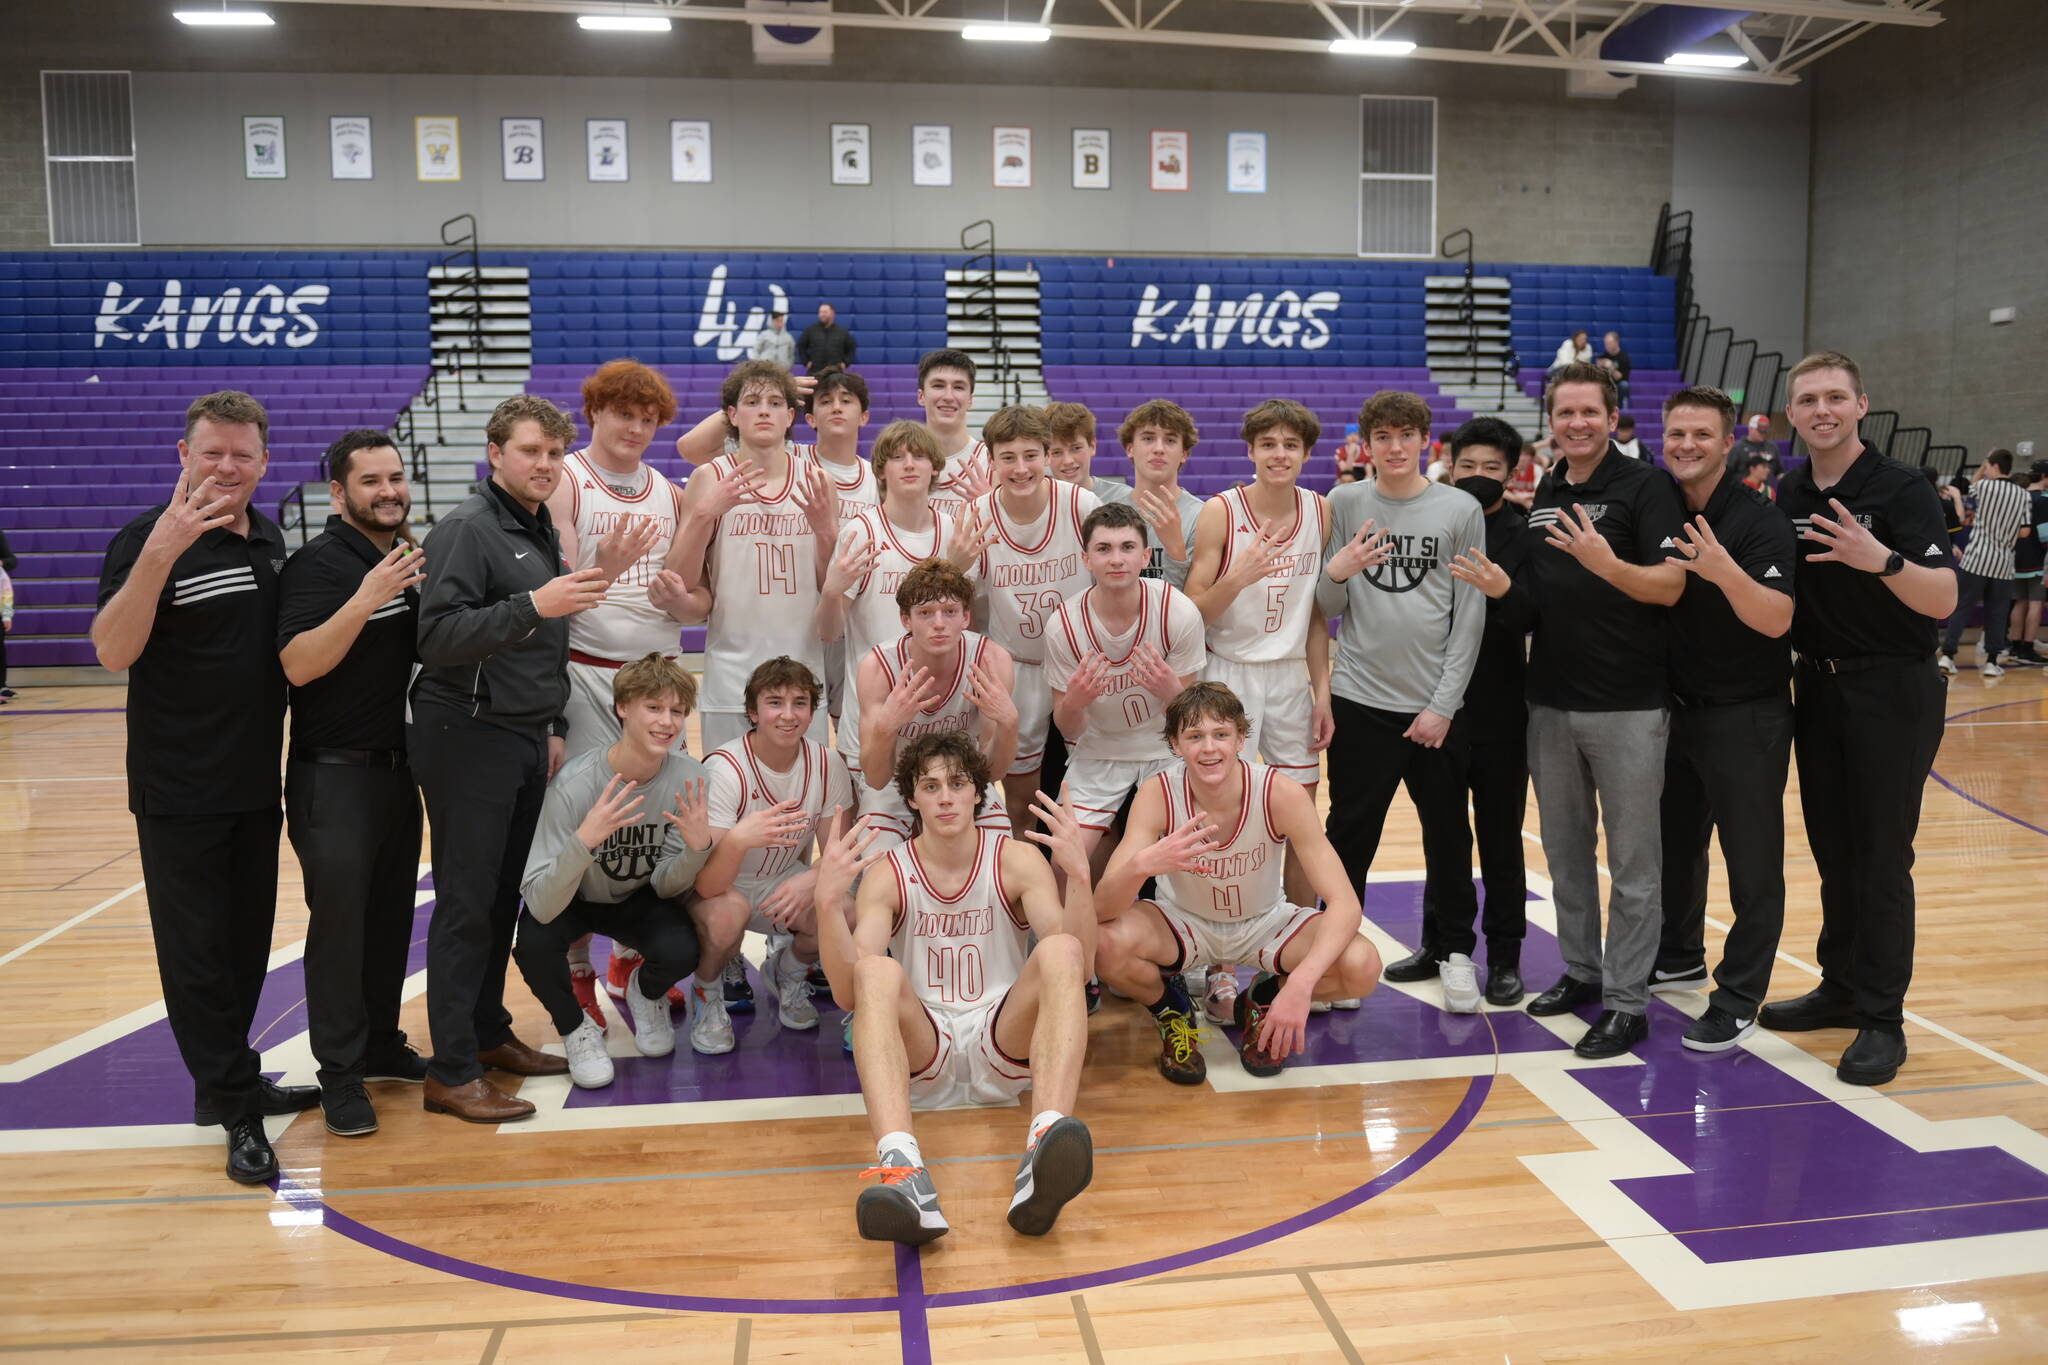 The Mount Si Boys Basketball team celebrates winning the KingCo League title on Feb. 4 at Lake Washington High School. Photo courtesy of Calder Productions.